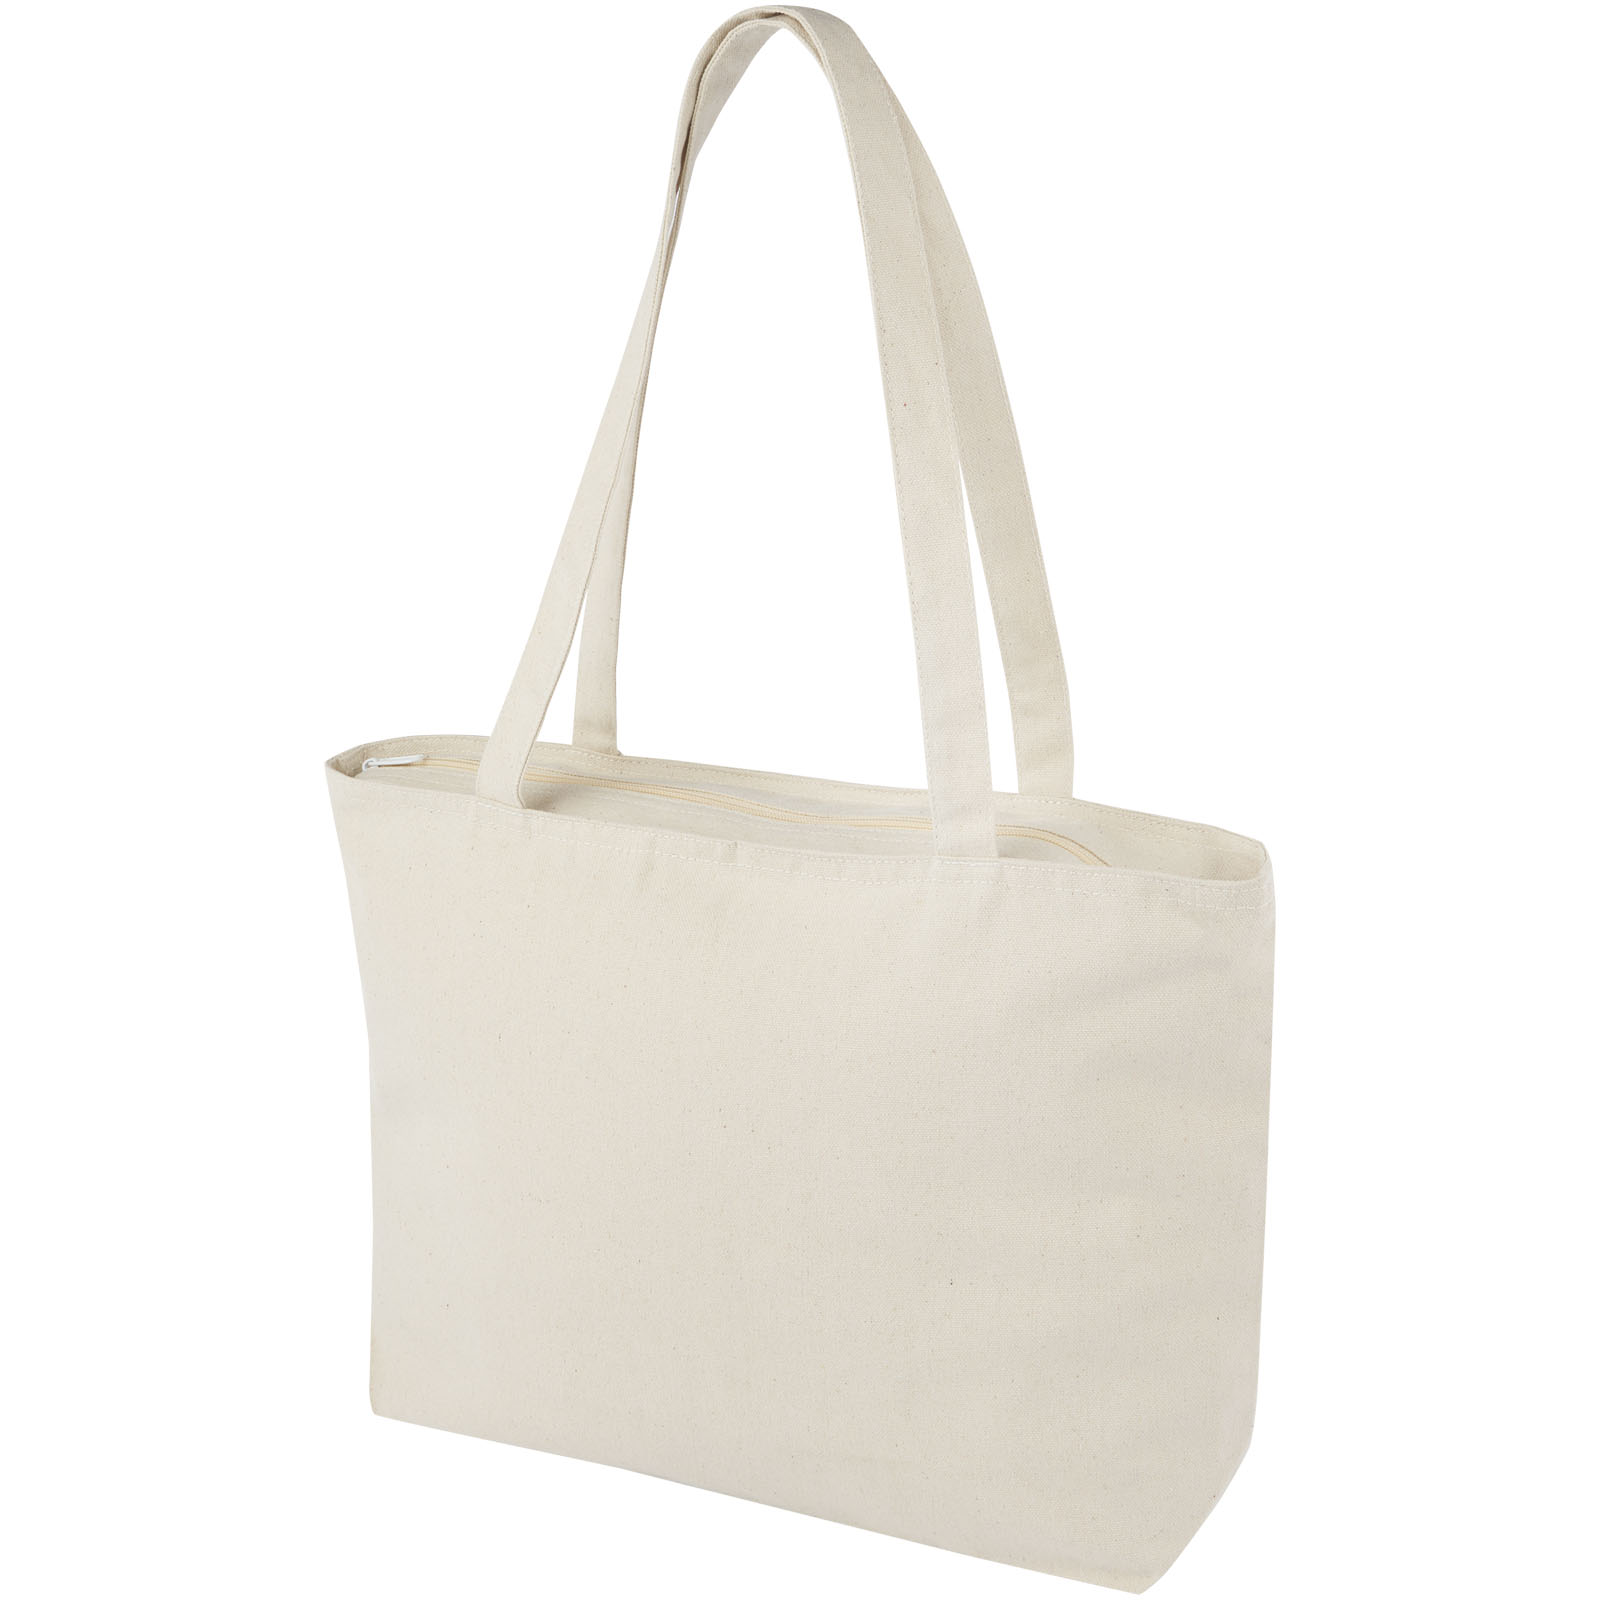 Bags - Ningbo 320 g/m² zippered cotton tote bag 15L